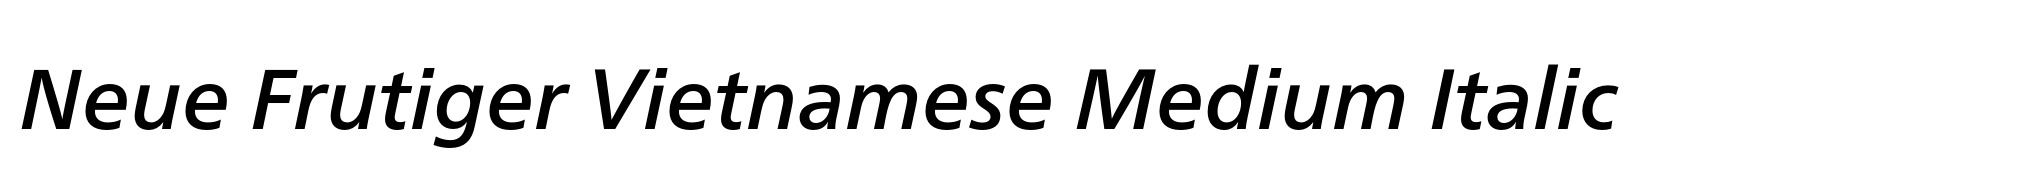 Neue Frutiger Vietnamese Medium Italic image